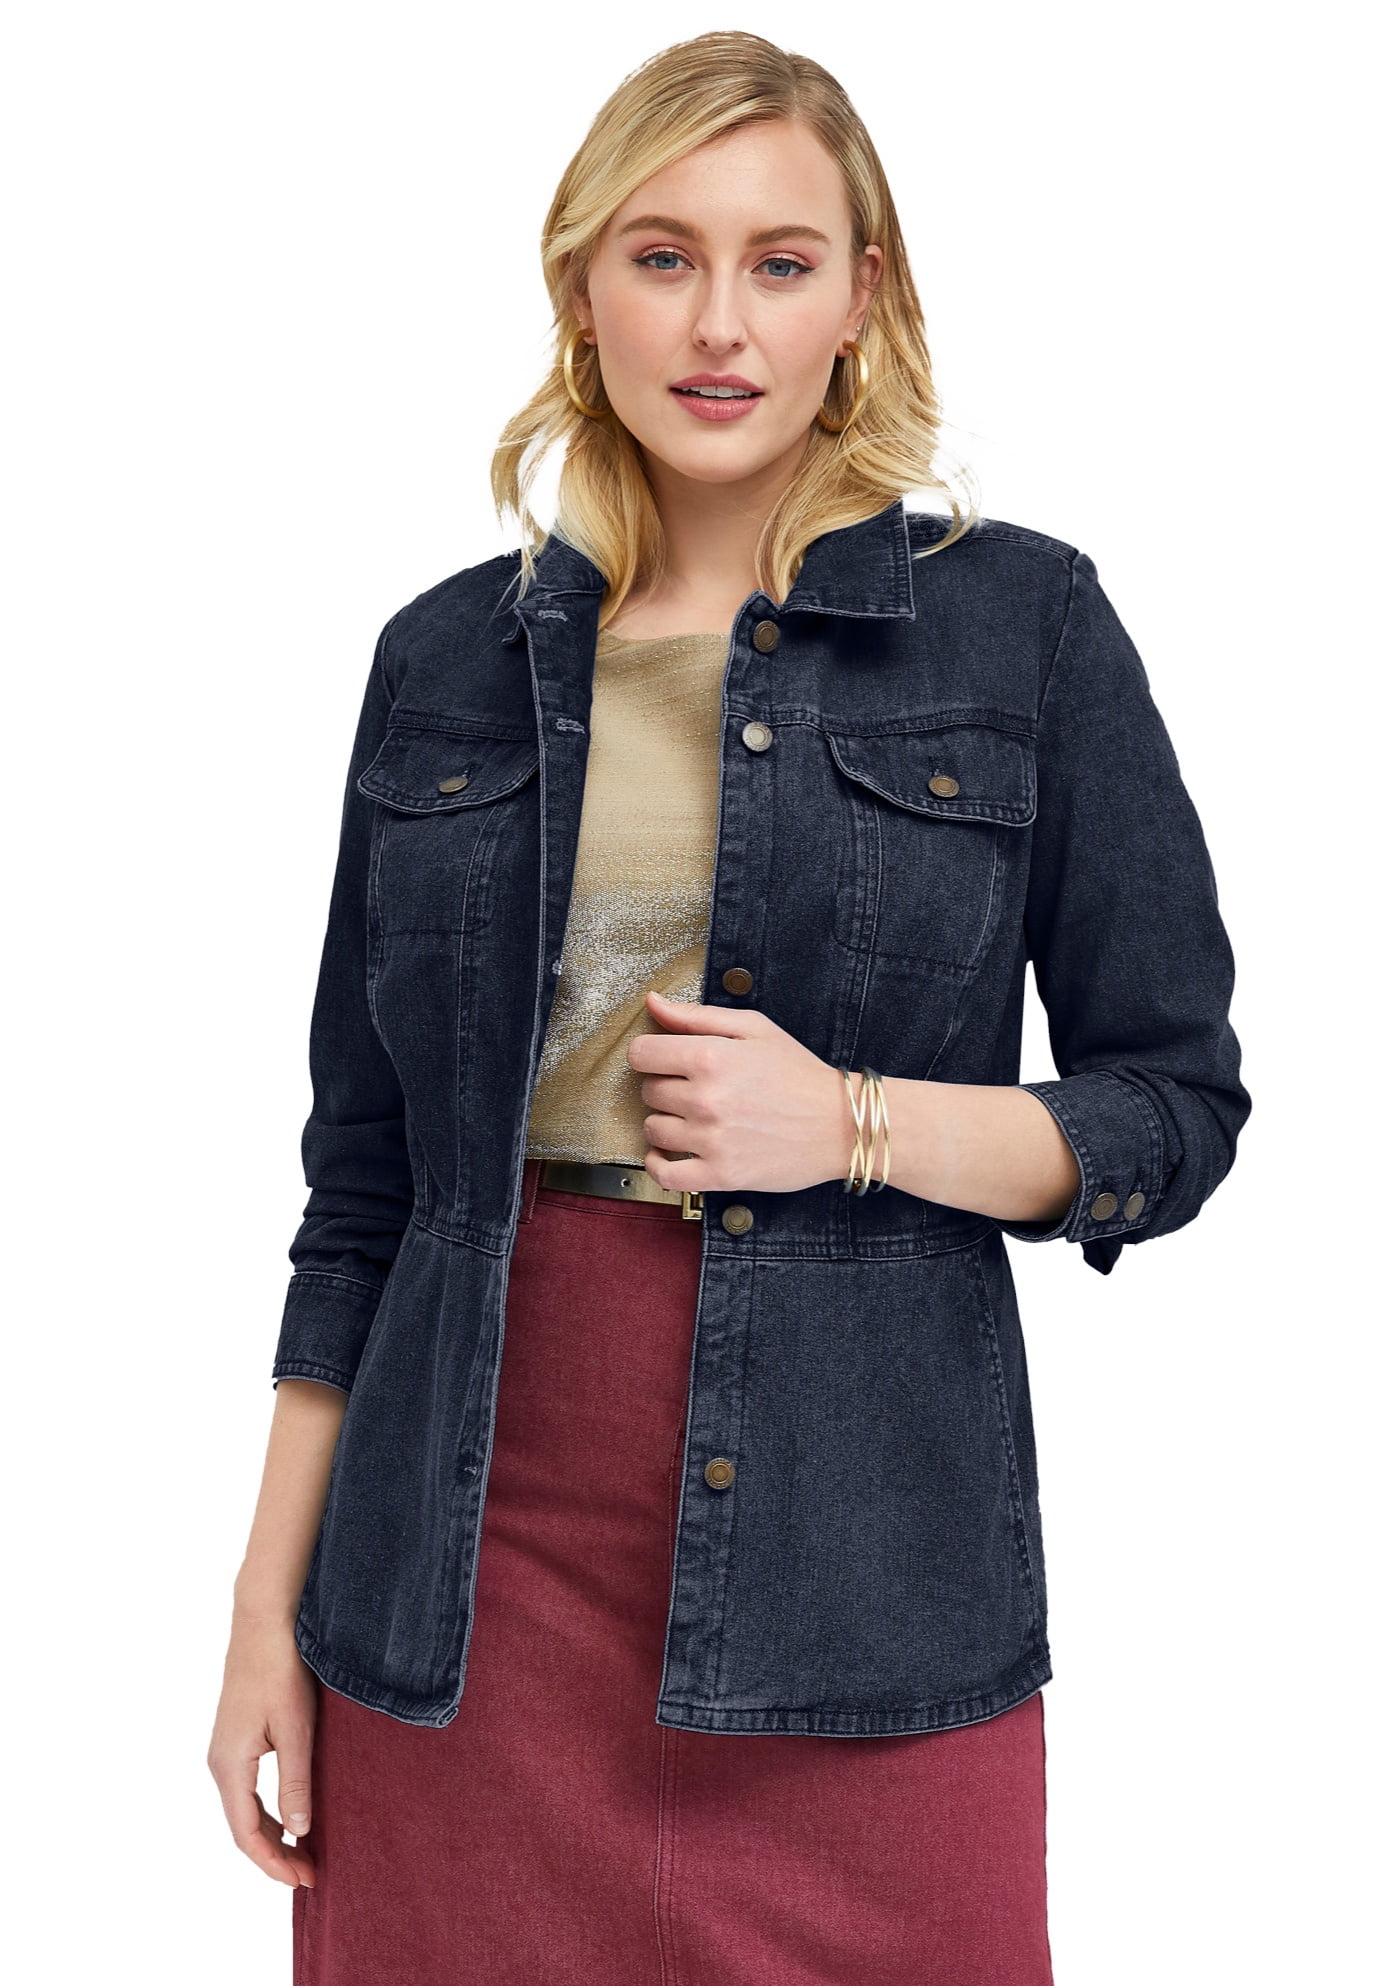 Jessica London Womens Plus Size Button Front Peplum Denim Jacket Feminine Jean Jacket